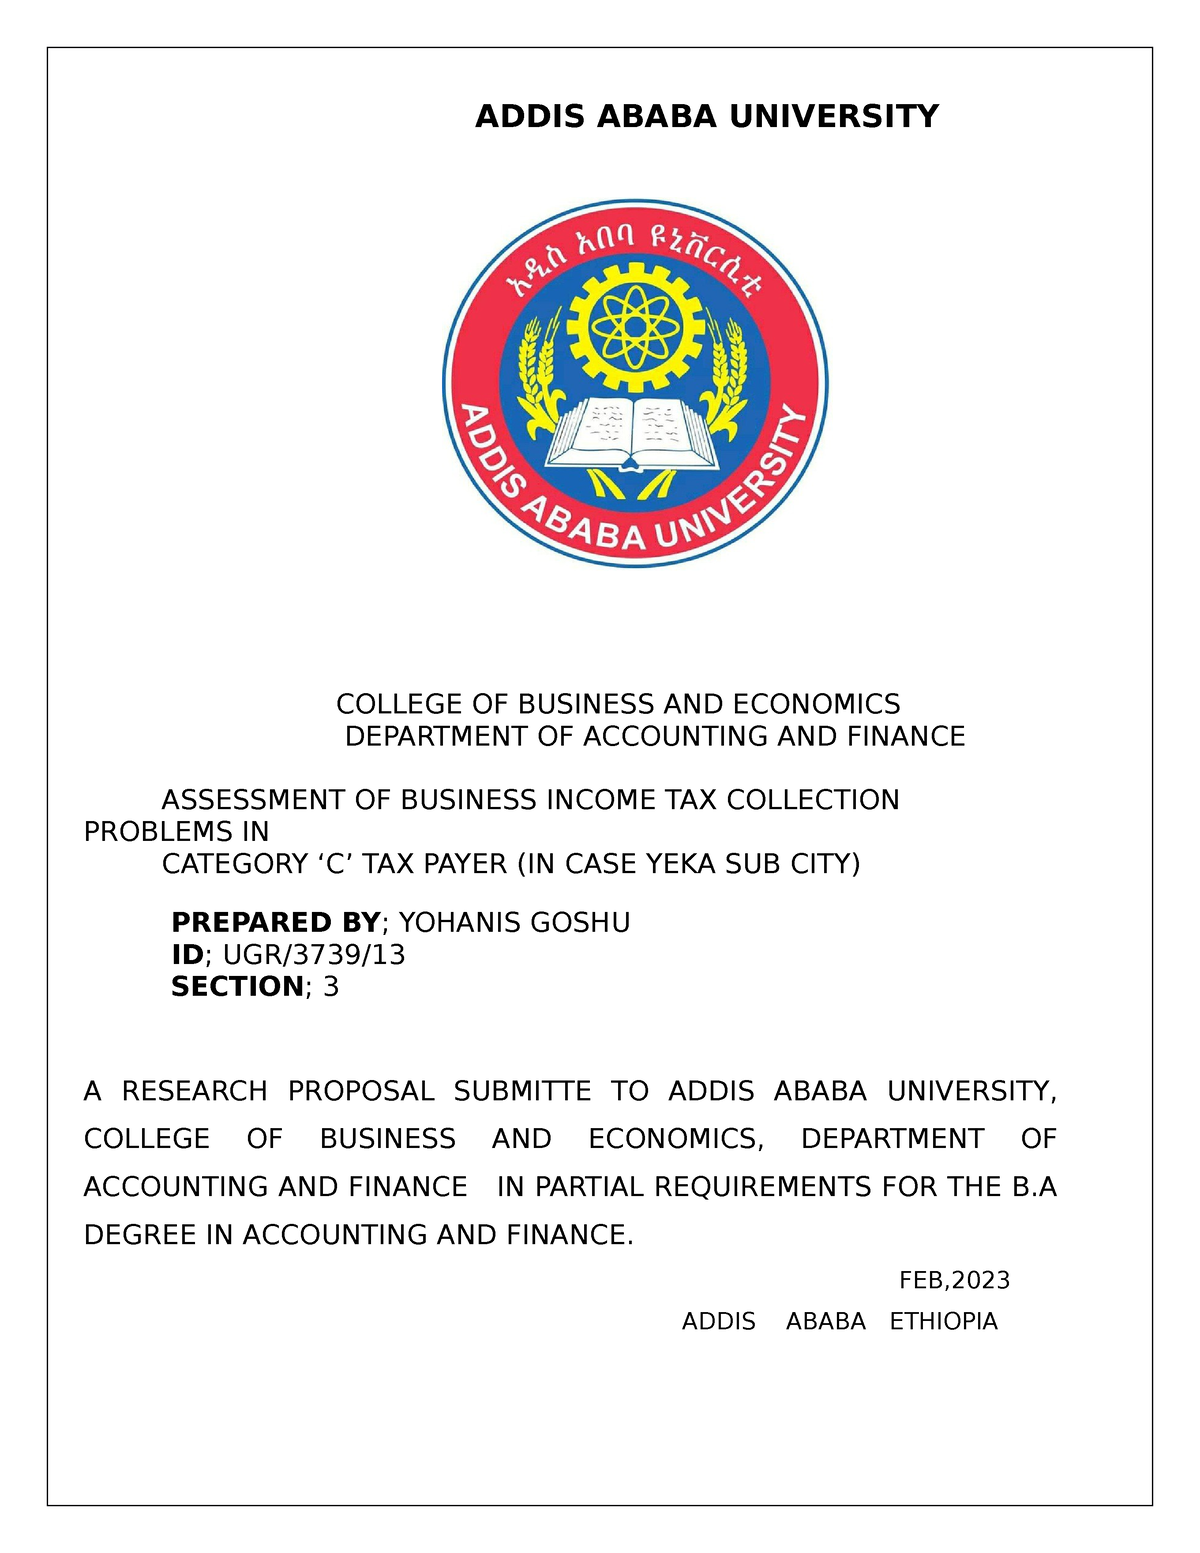 thesis proposal format addis ababa university